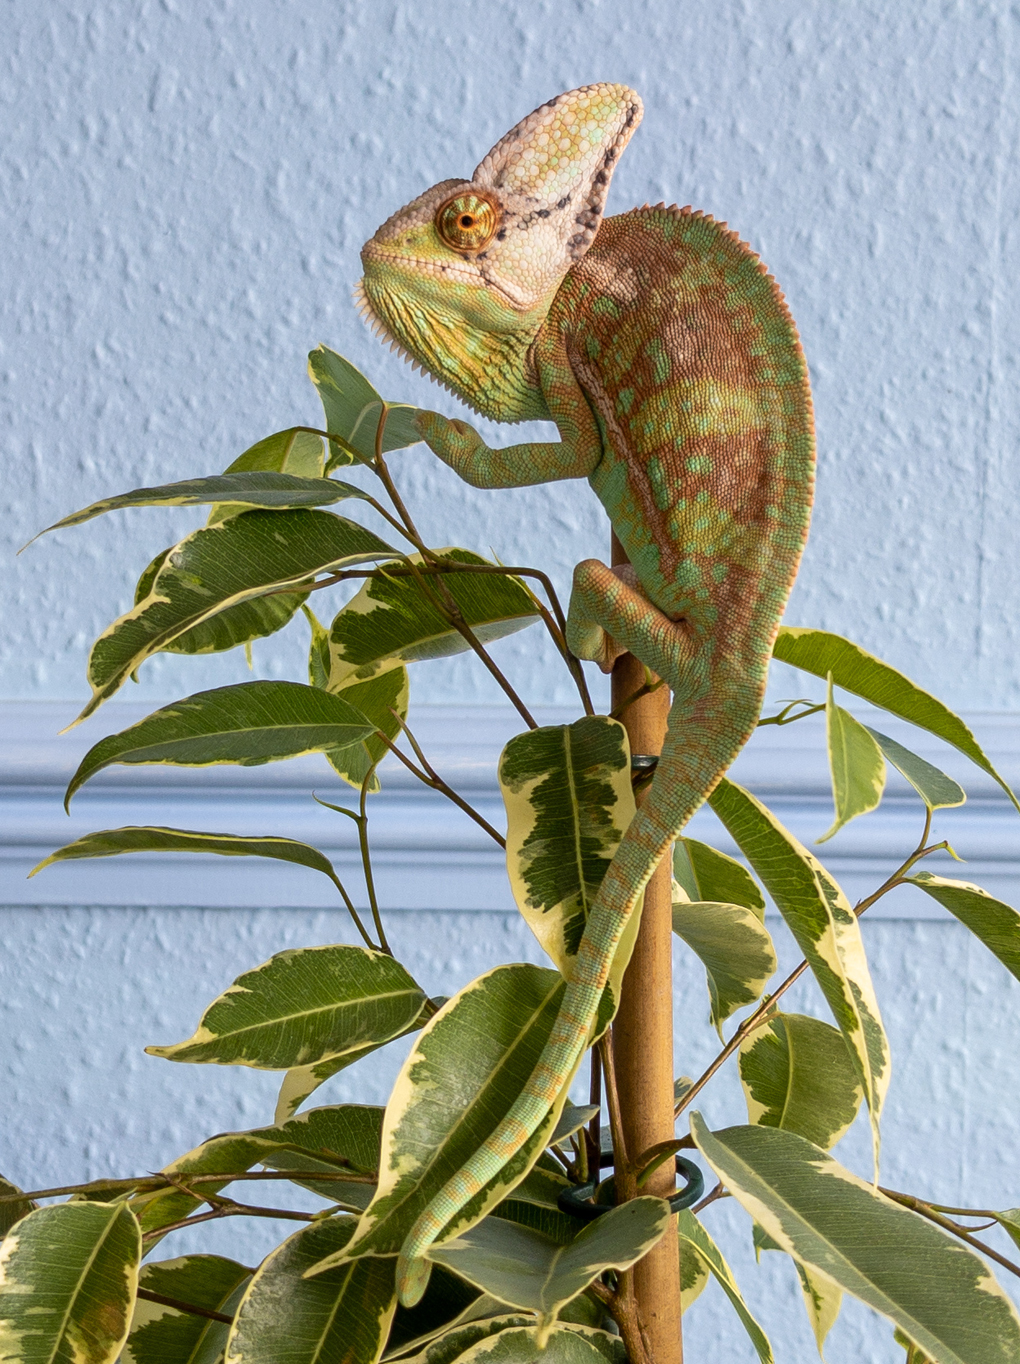 A juvenile 'veiled' (aka Yemen) chameleon, displaying rusty orange and light green banding (his 